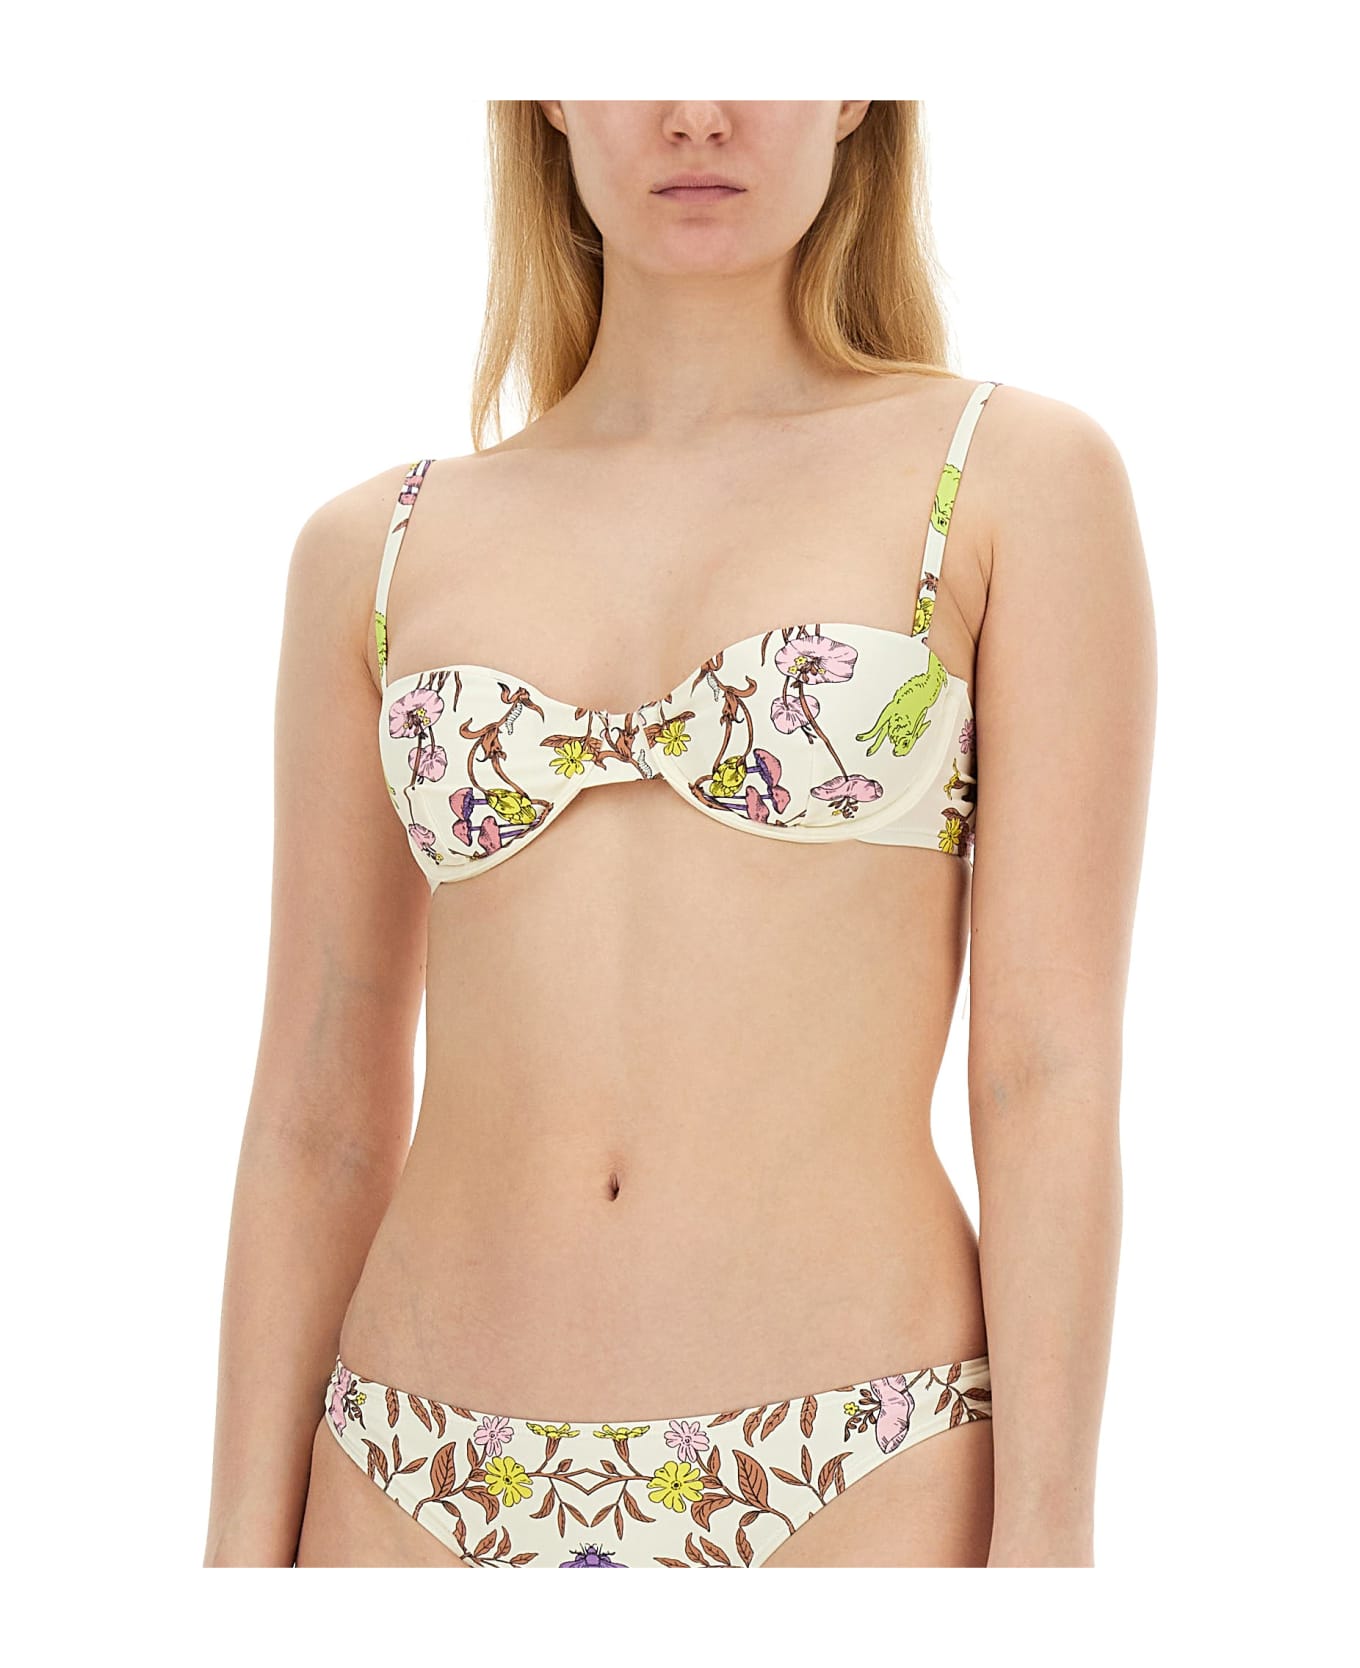 Tory Burch Printed Underwire Bikini Top - Chartreuse Meadow 水着